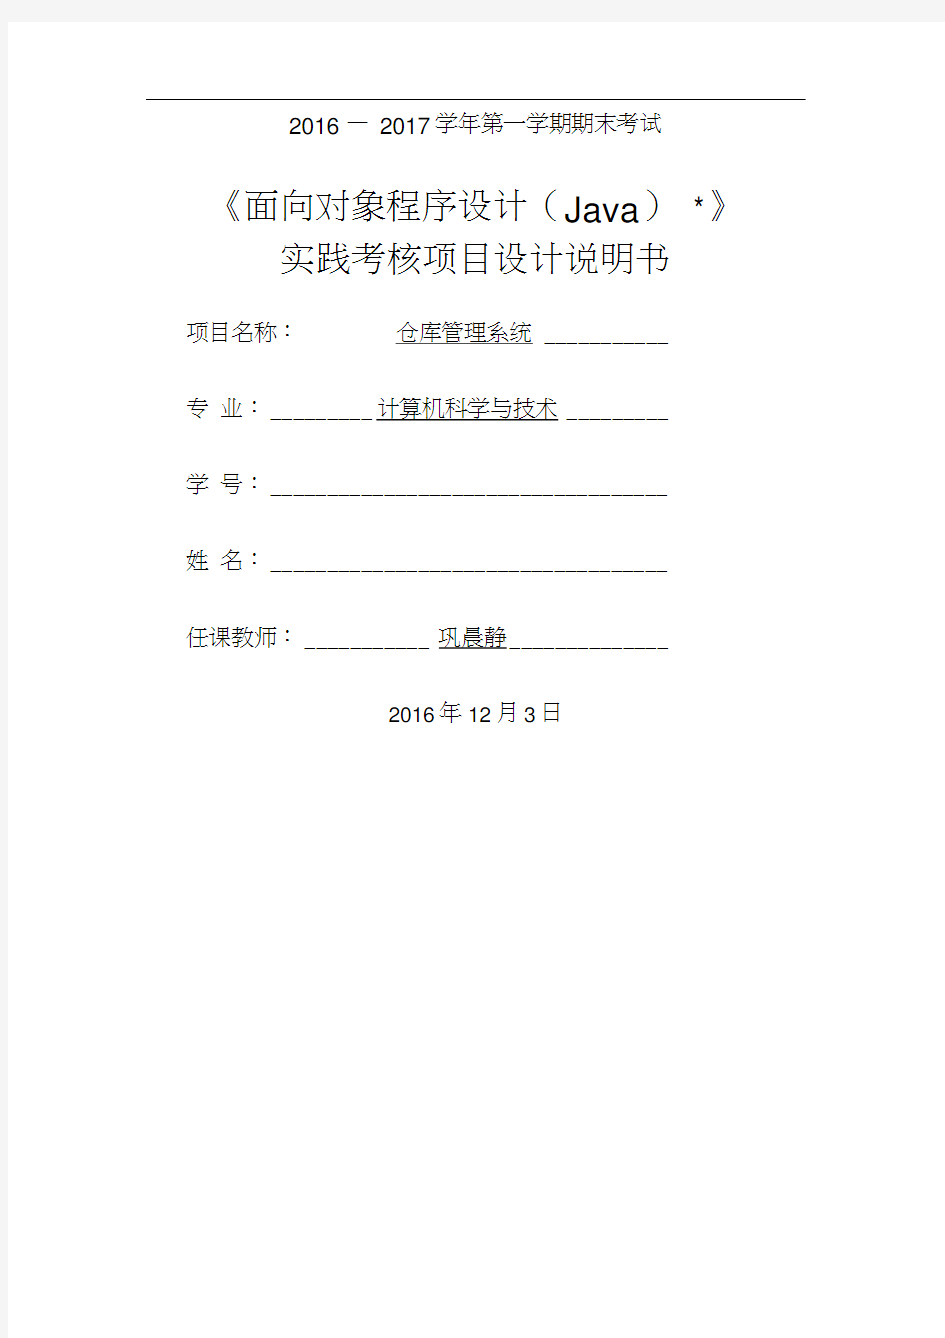 Java仓库管理系统报告